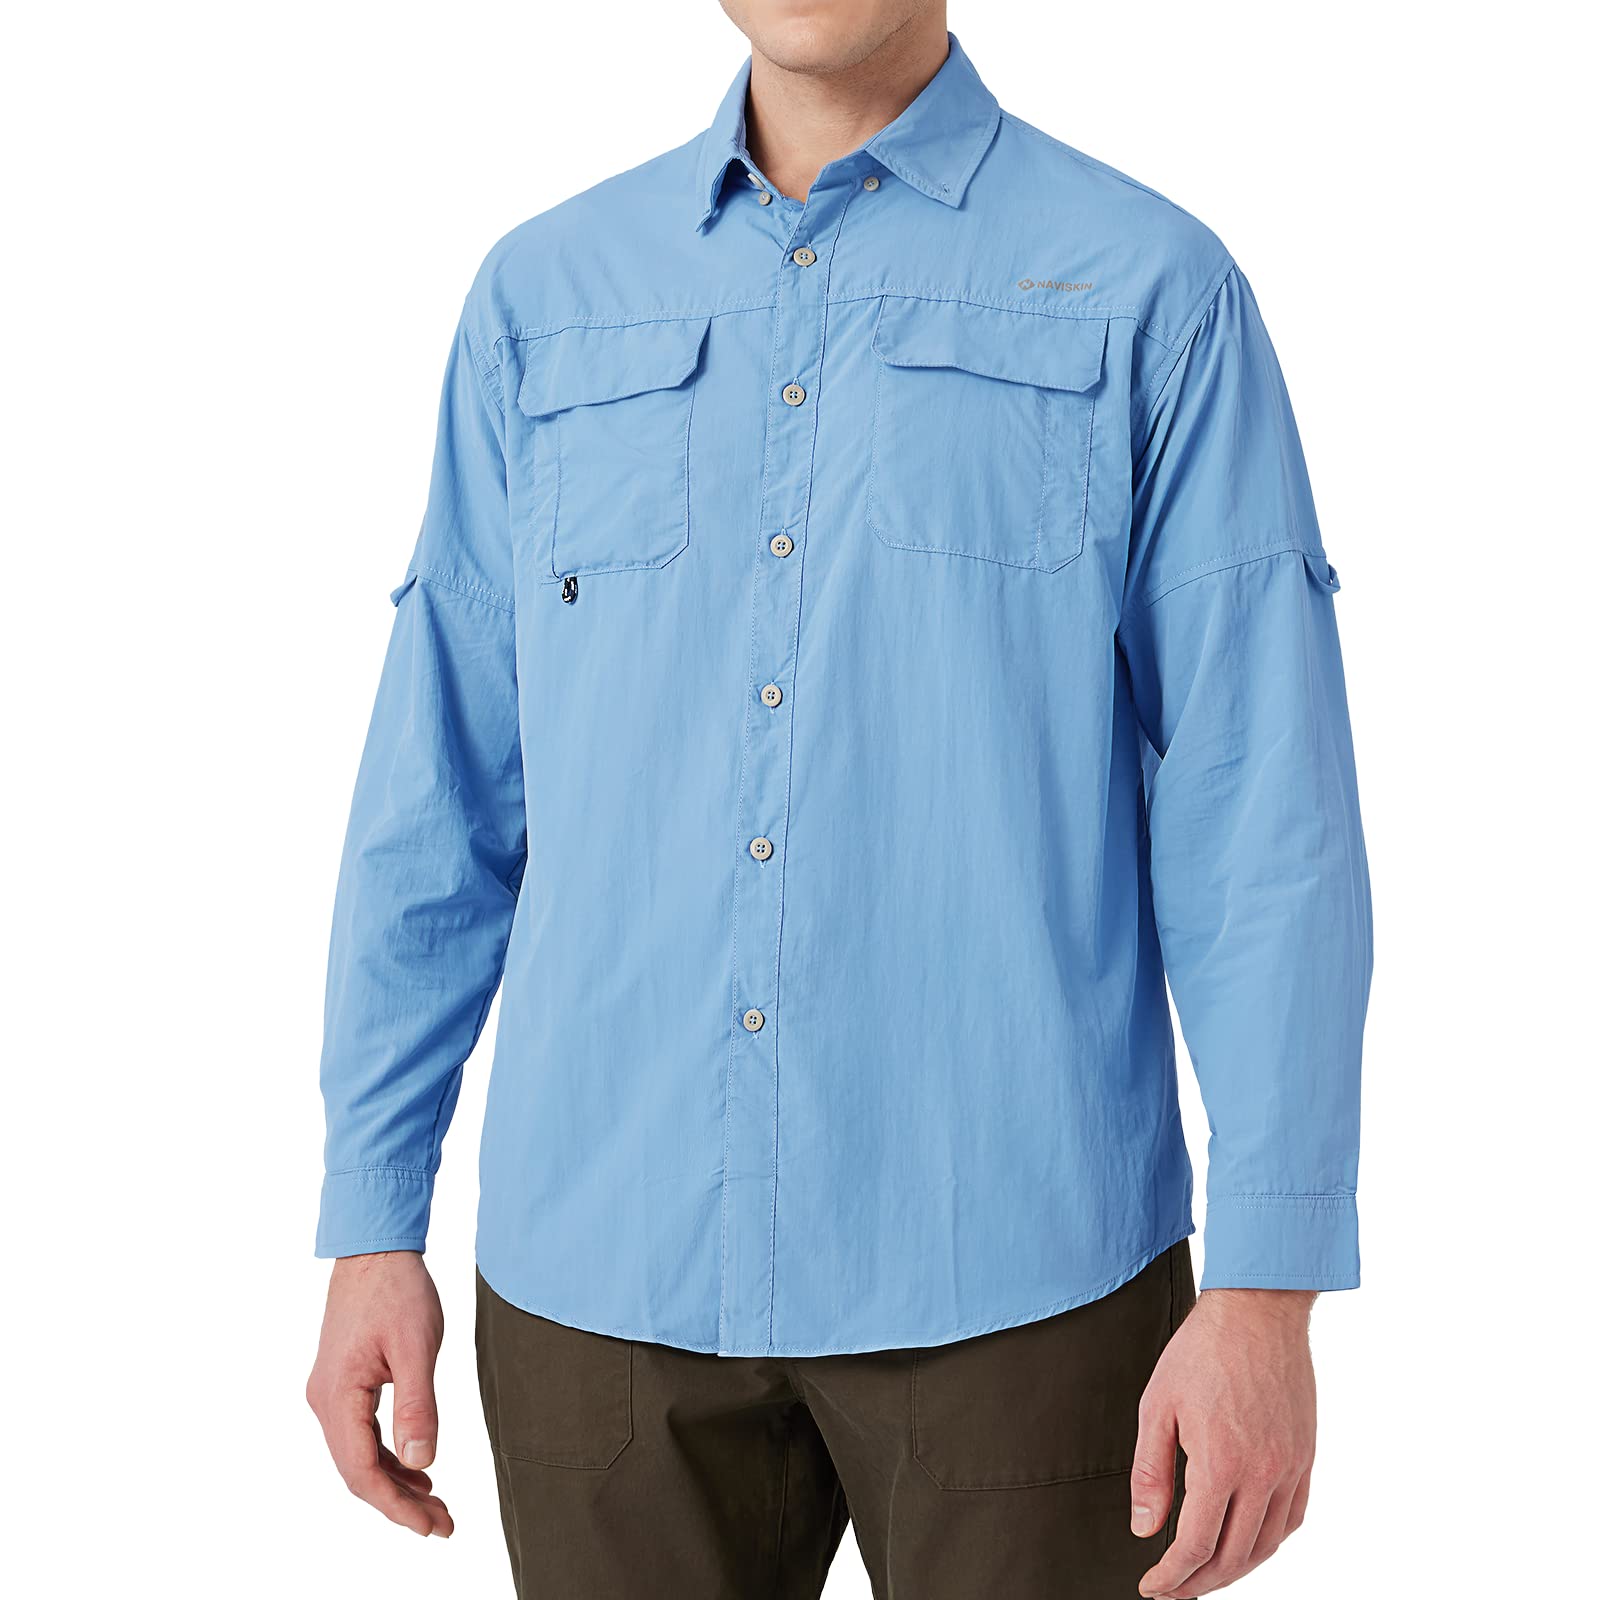 Naviskin Mens Sun Protection Fishing Shirts Upf 50 Long Sleeve Sun Shirts For Men Pfg Hiking Travel Shirts Bluebell Size M